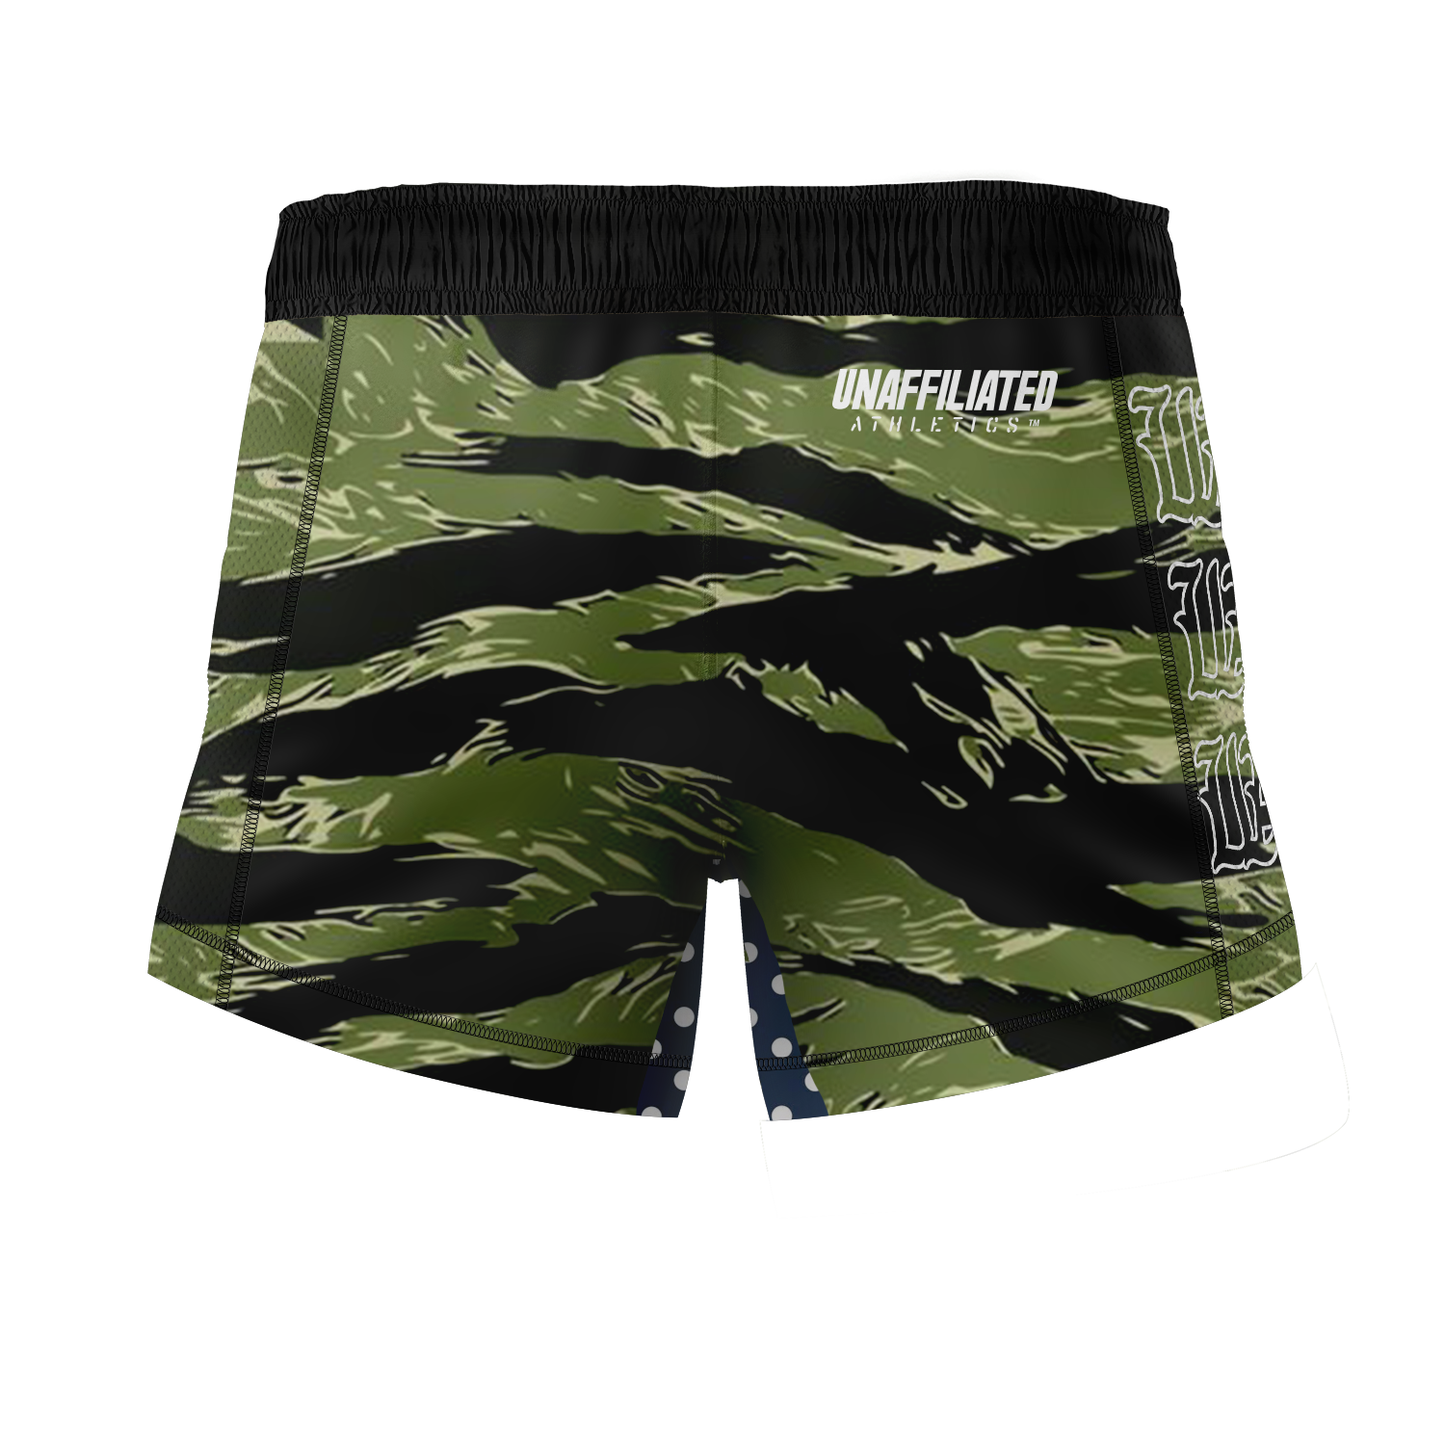 Unaffiliated Athletics muay thai shorts Polka Dots and Tiger Stripes, camo green